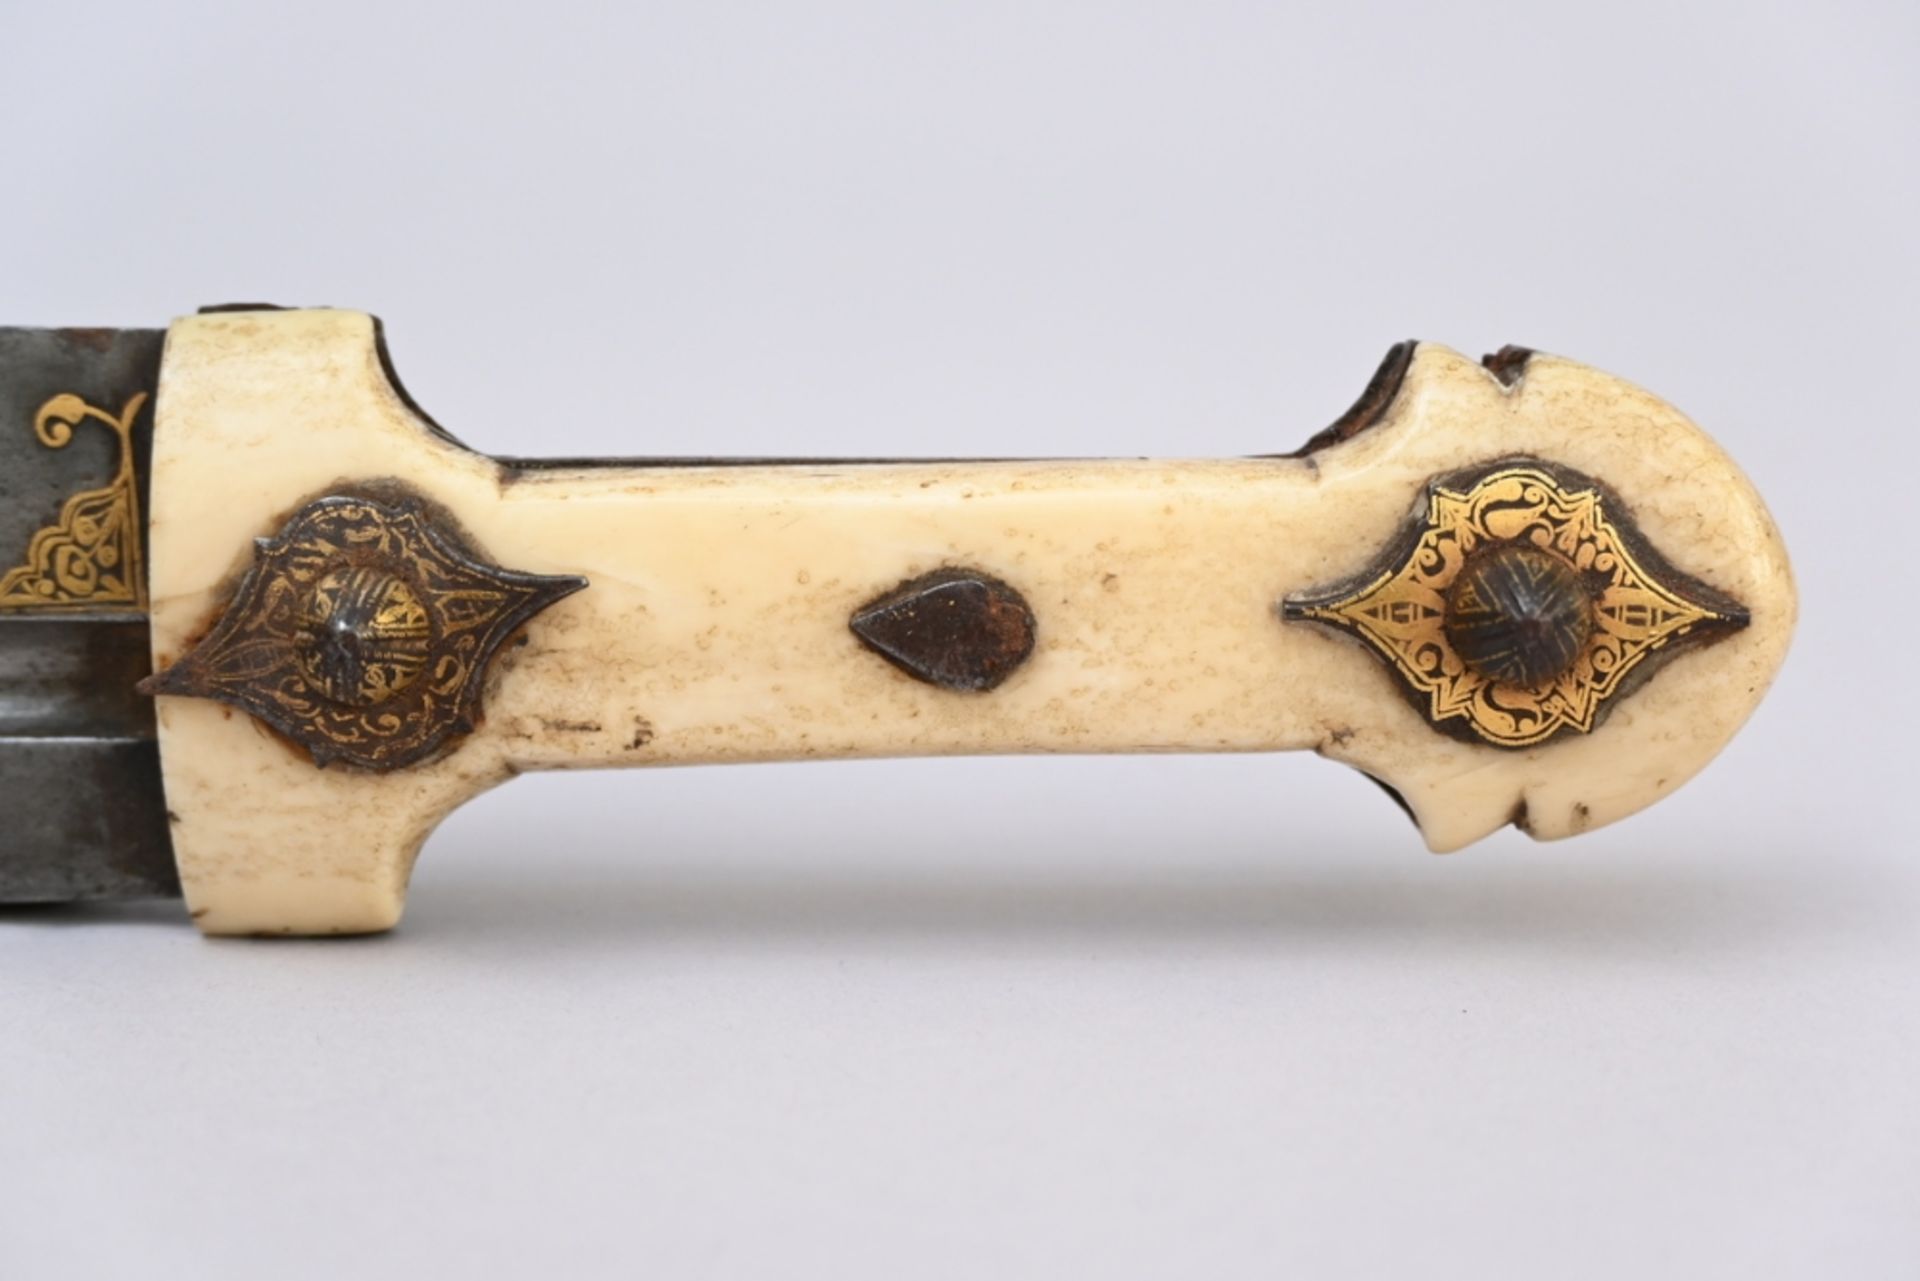 Kindjal dagger with gilt decoration, 19th century (l 51.5 cm) - Image 3 of 5